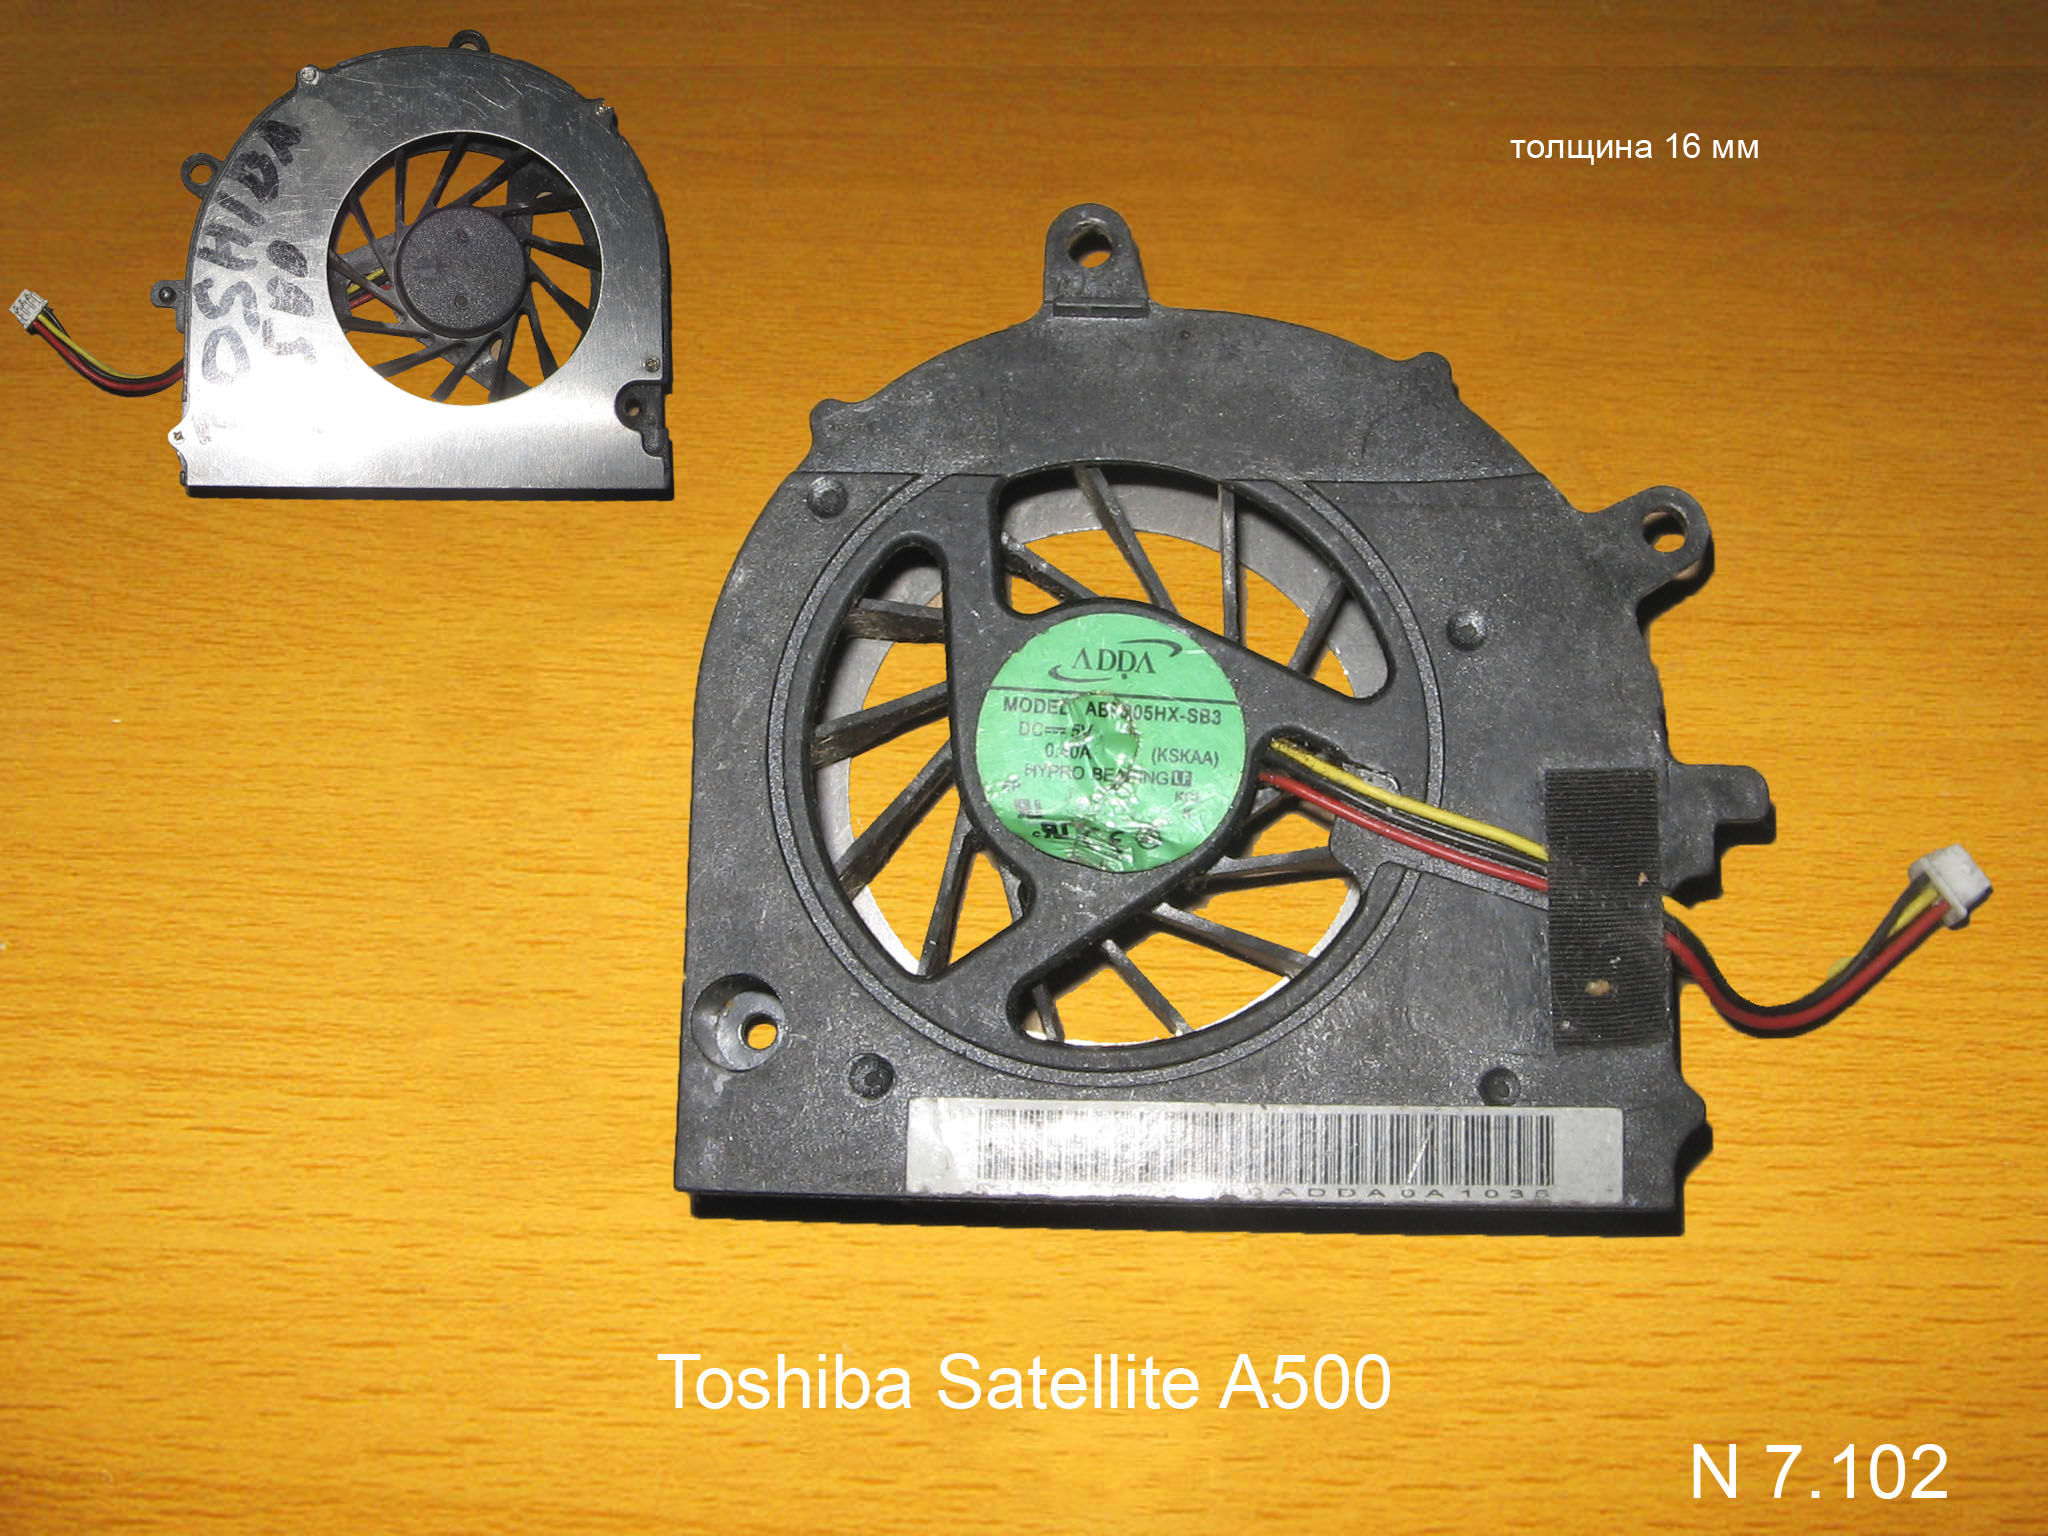 Toshiba Satellite A500 № 7.104   УВЕЛИЧИТЬ